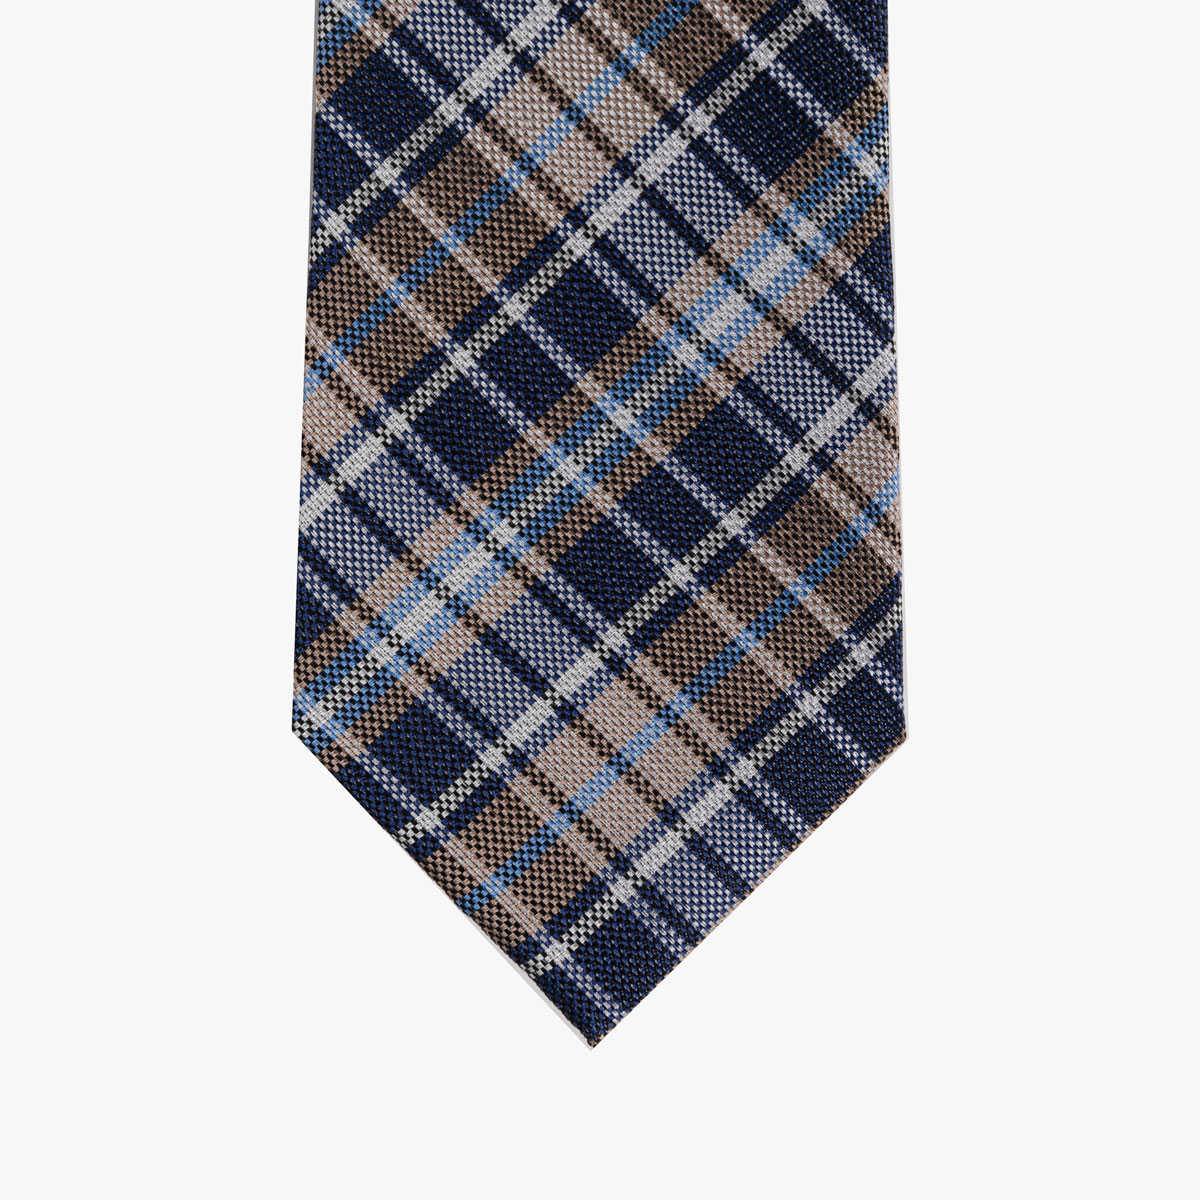 Krawatte mit Karo Muster in blau beige